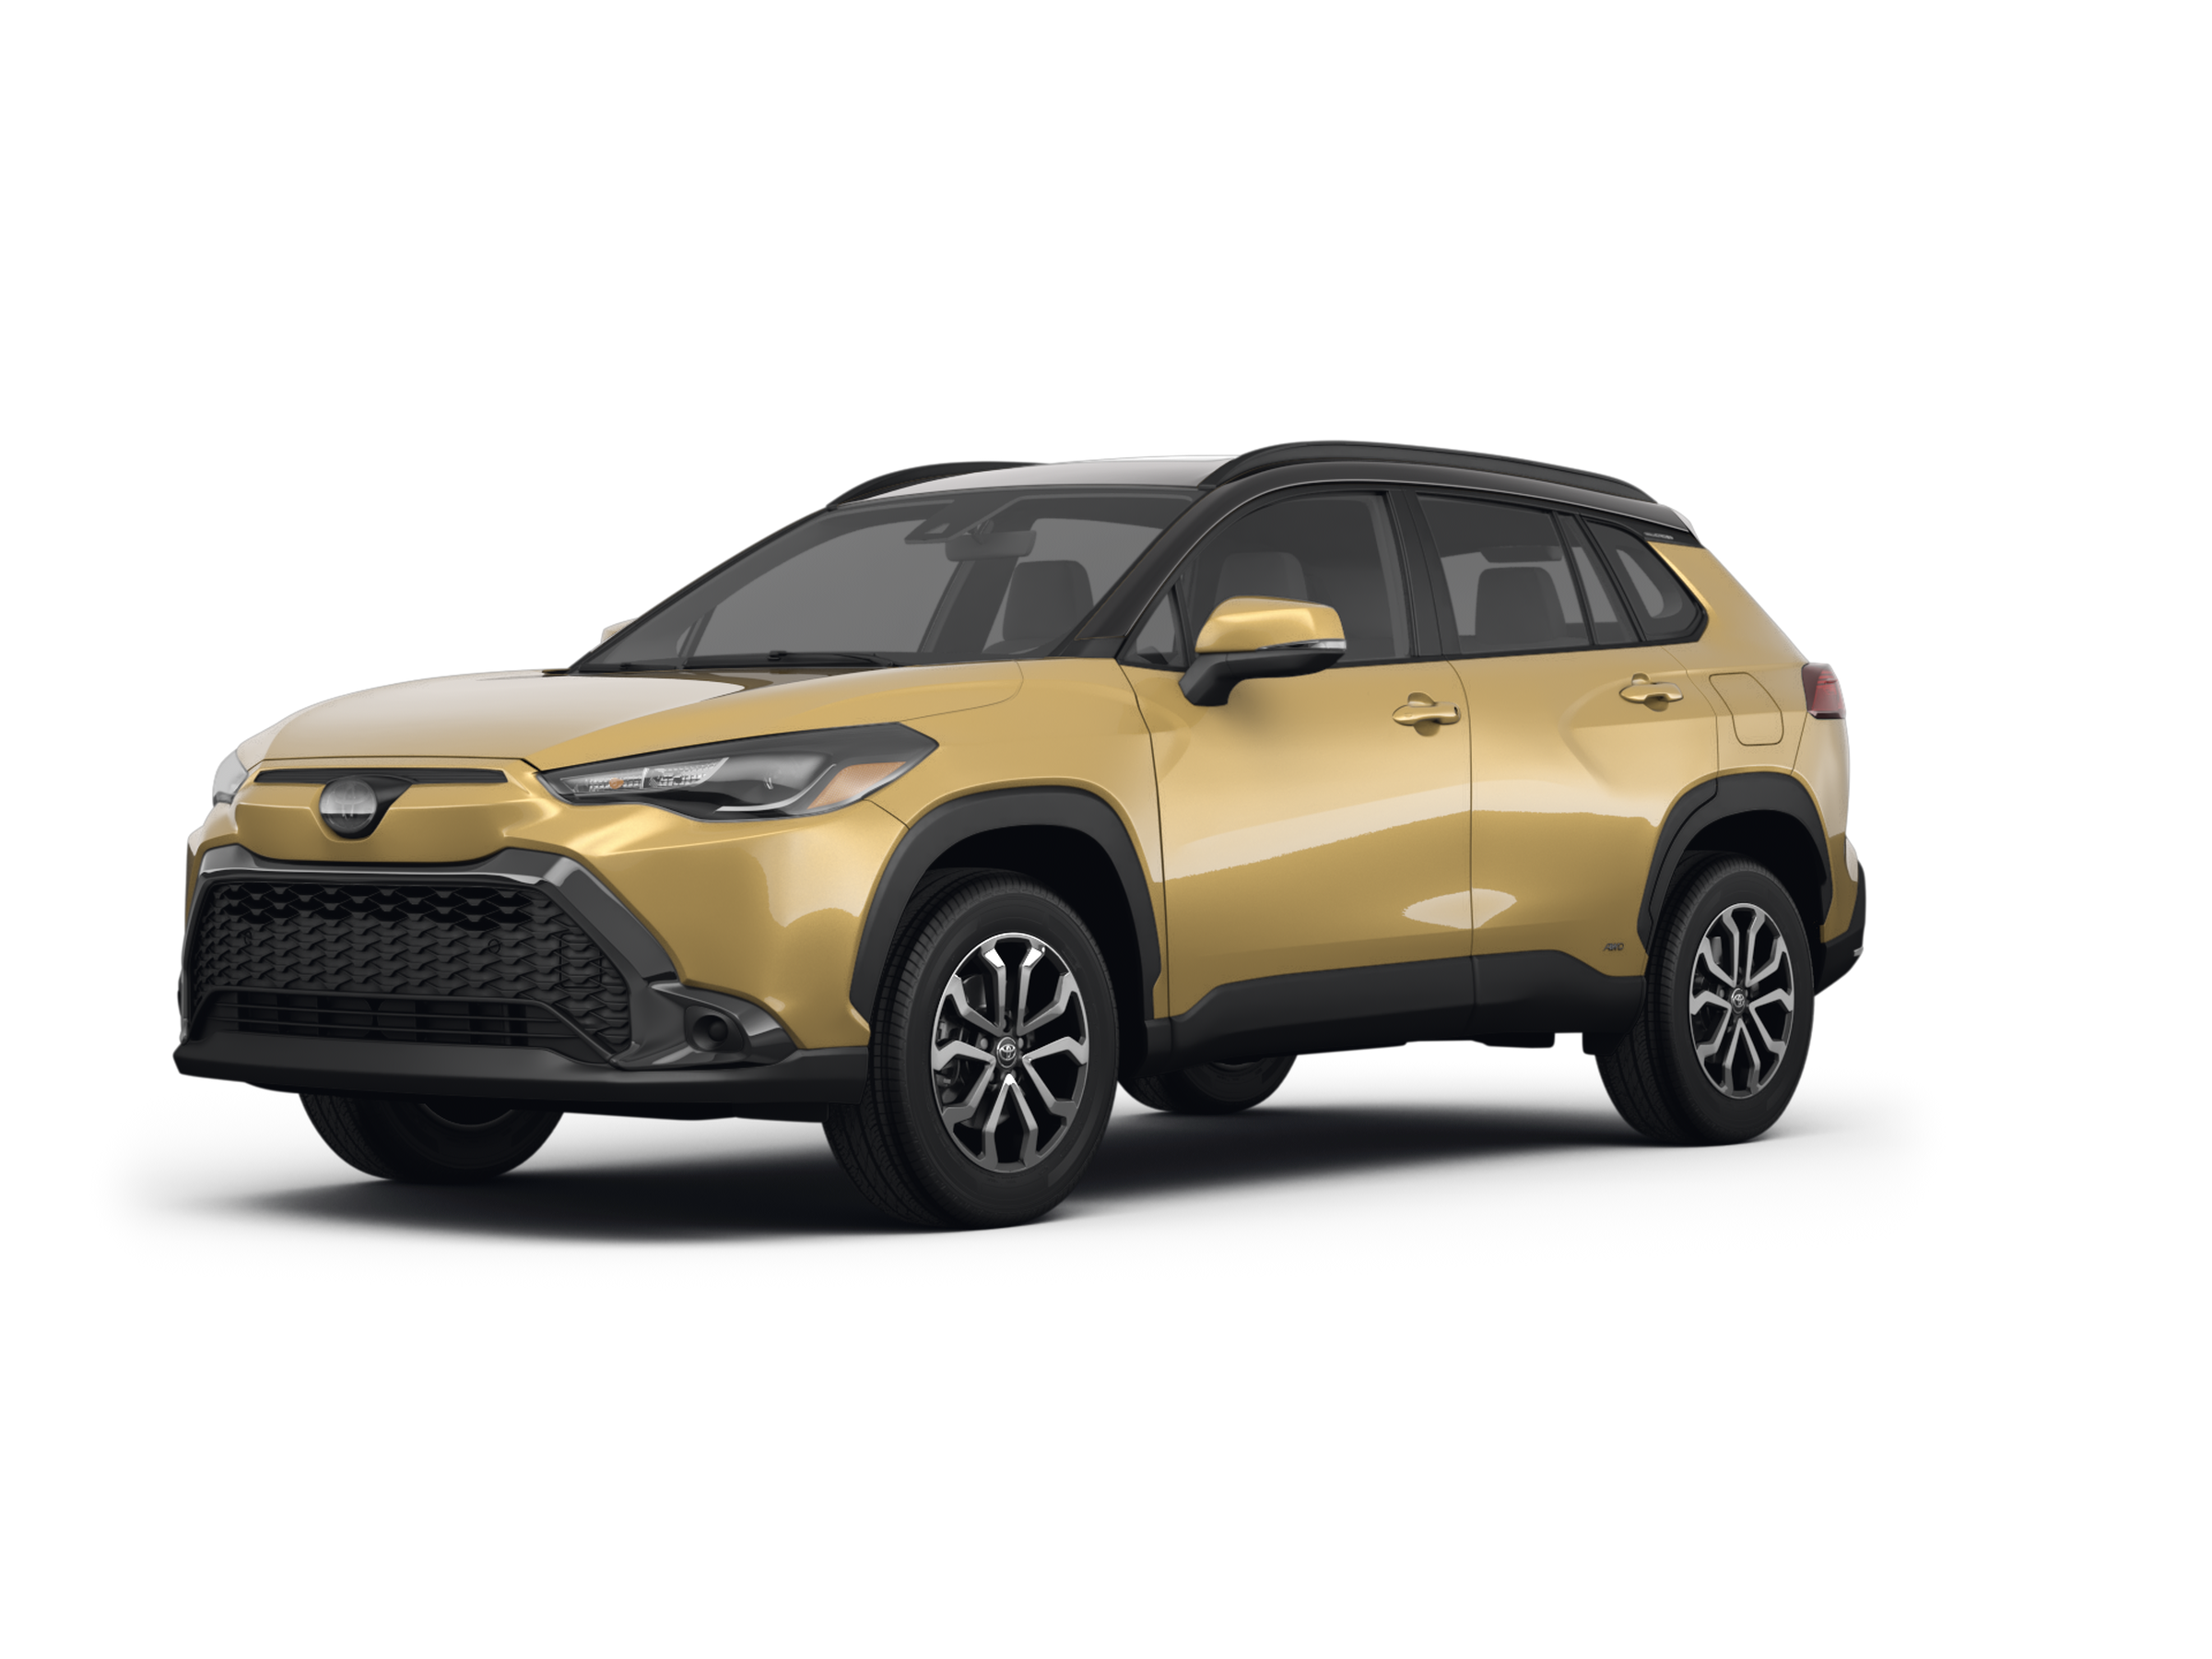 Toyota Yaris Cross Prices, Reviews & Range